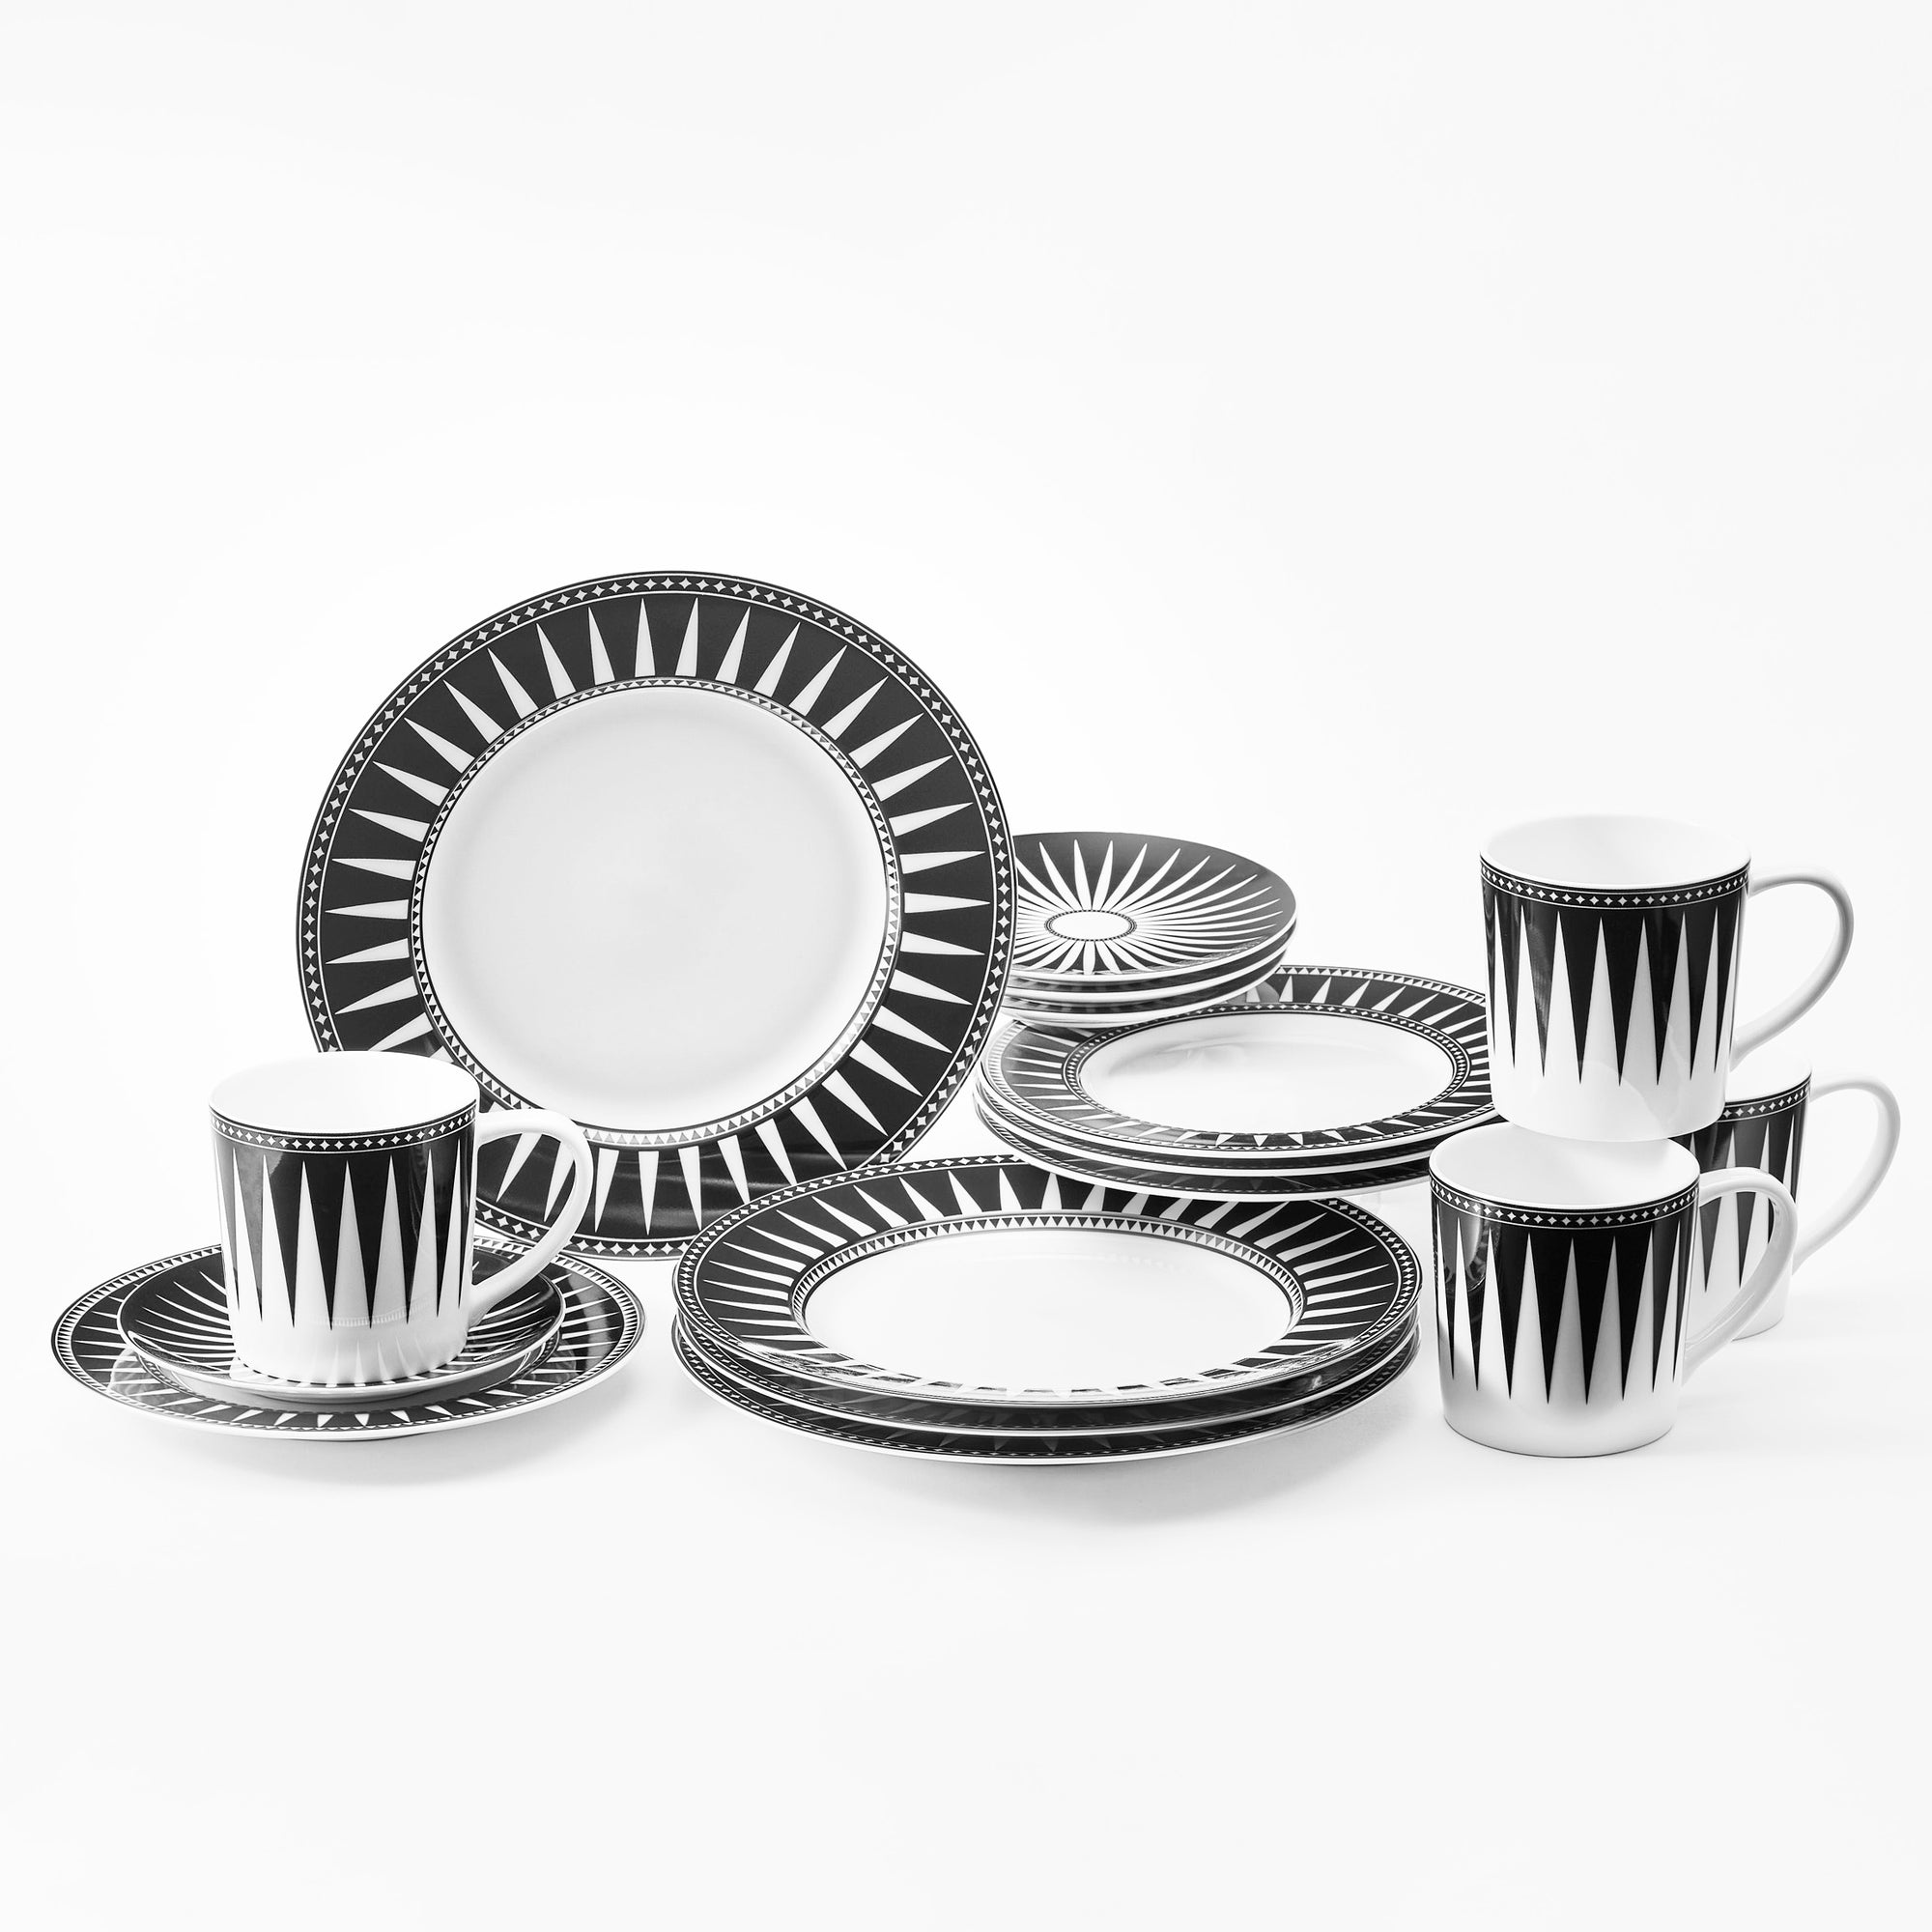 Marrakech black and white 16 piece dinnerware set for 4 in porcelain from Caskata